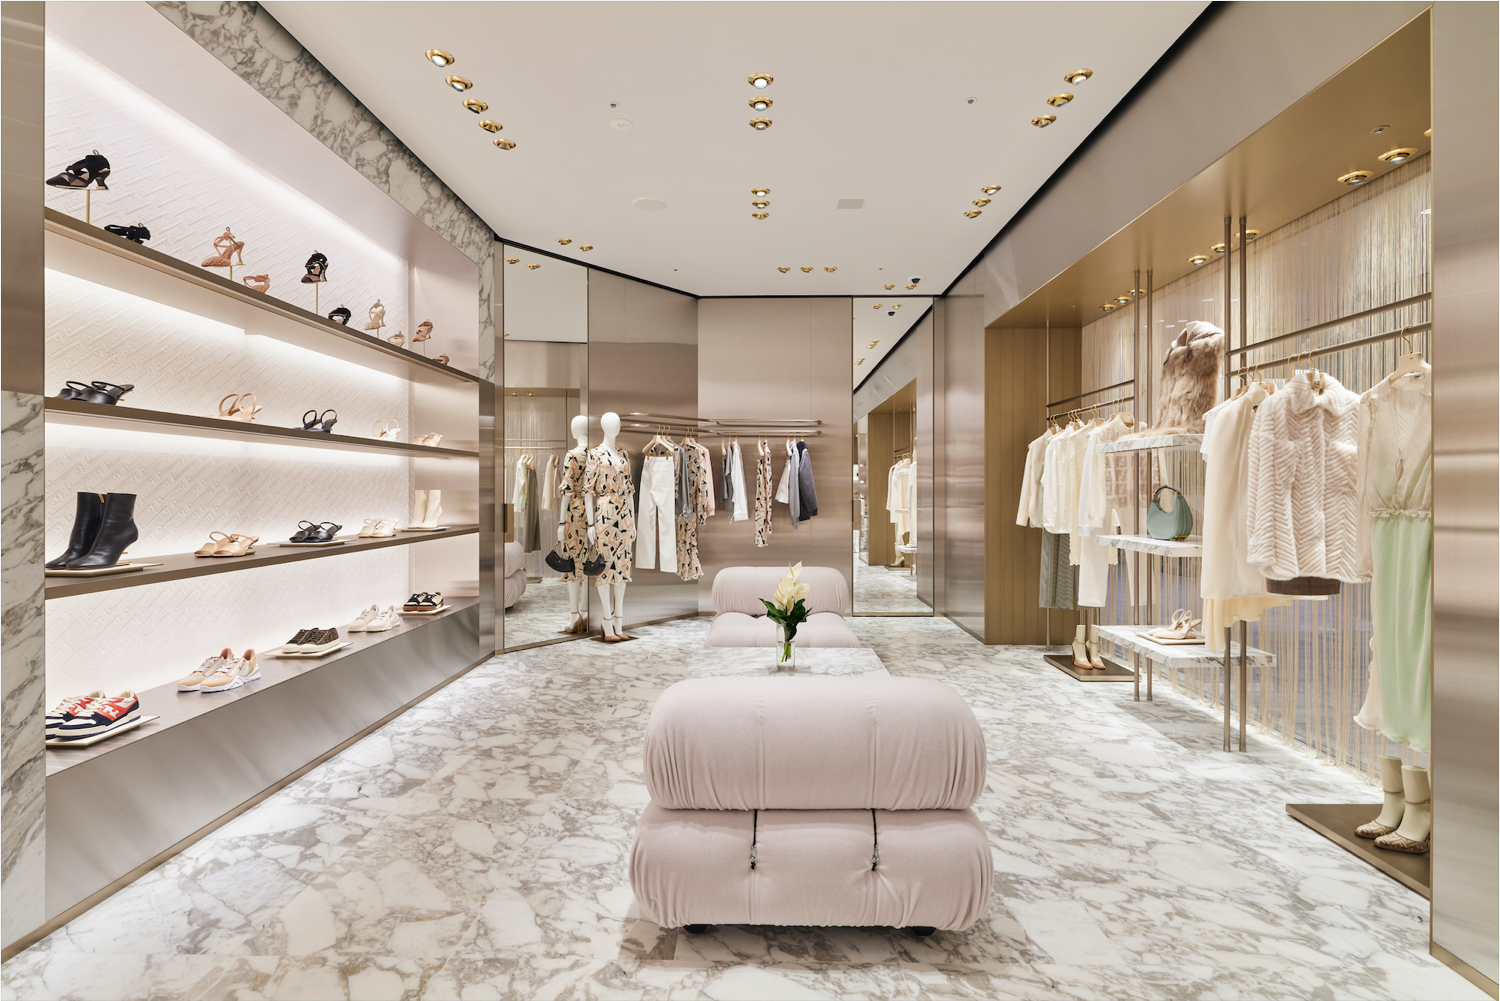 Fendi Introduces New Luxury Store Concept in Dubai – WWD